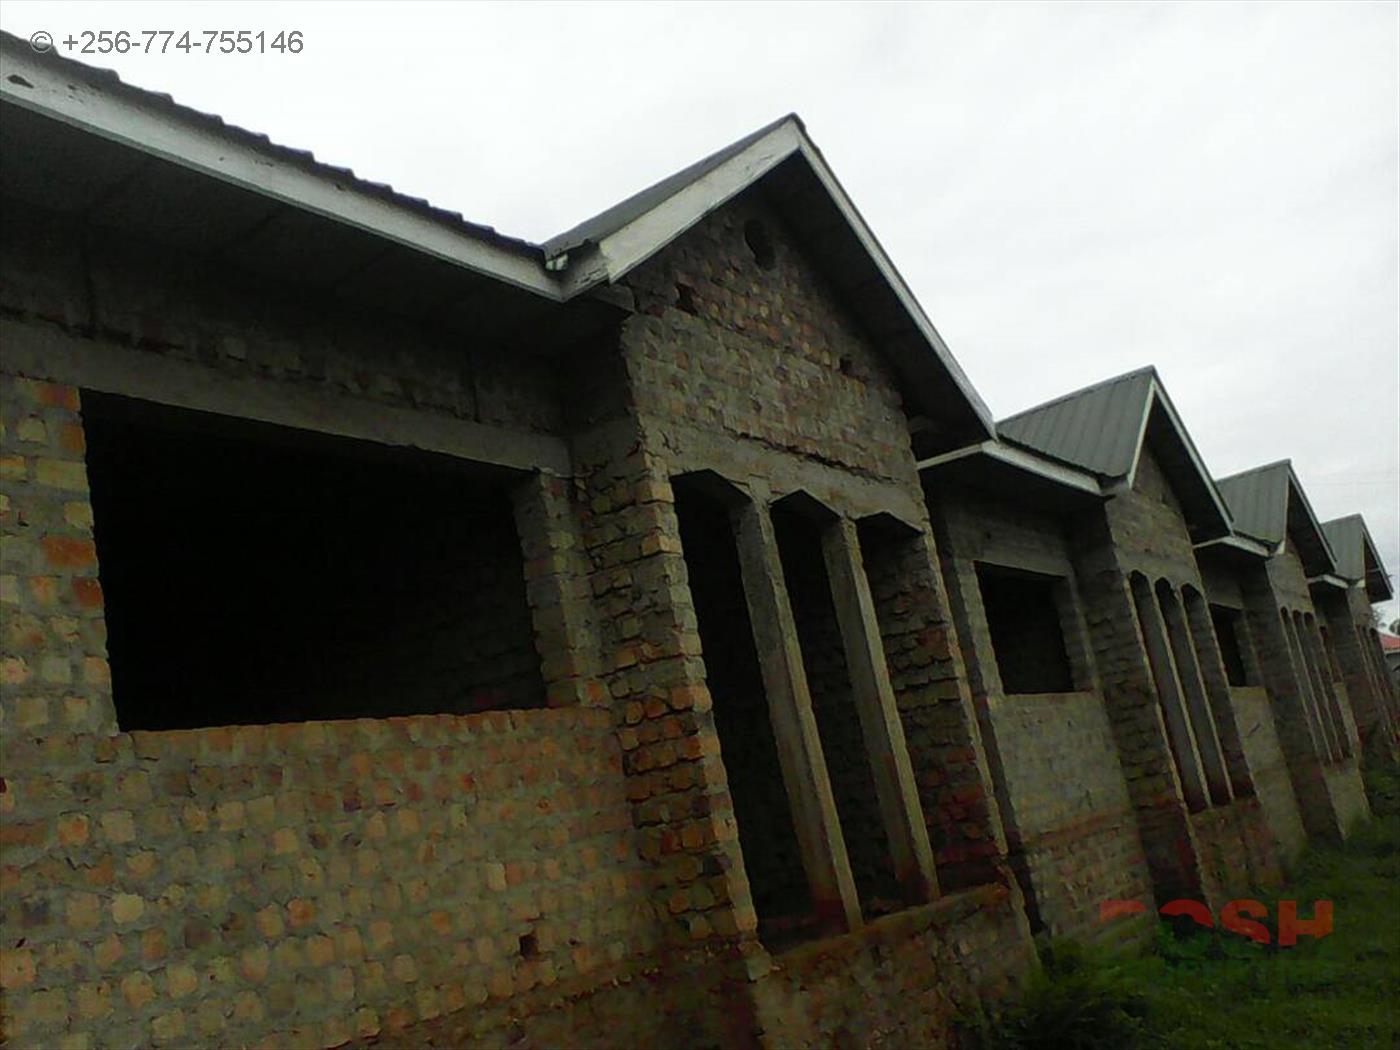 Semi Detached for sale in Gayaza Wakiso